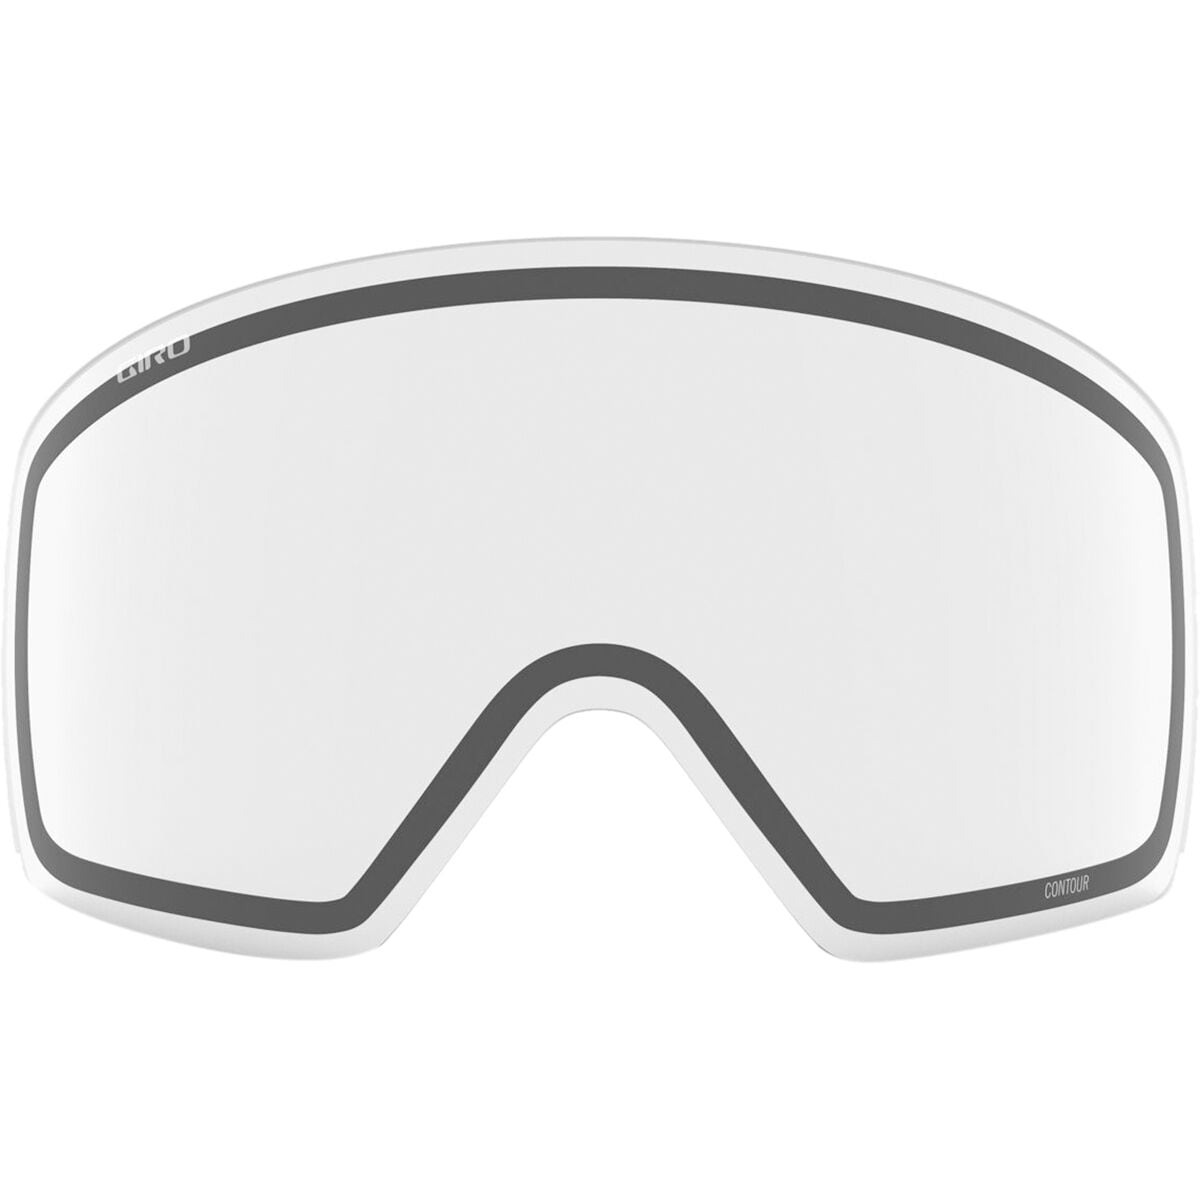 Giro Contour RS Goggle Replacement Lens